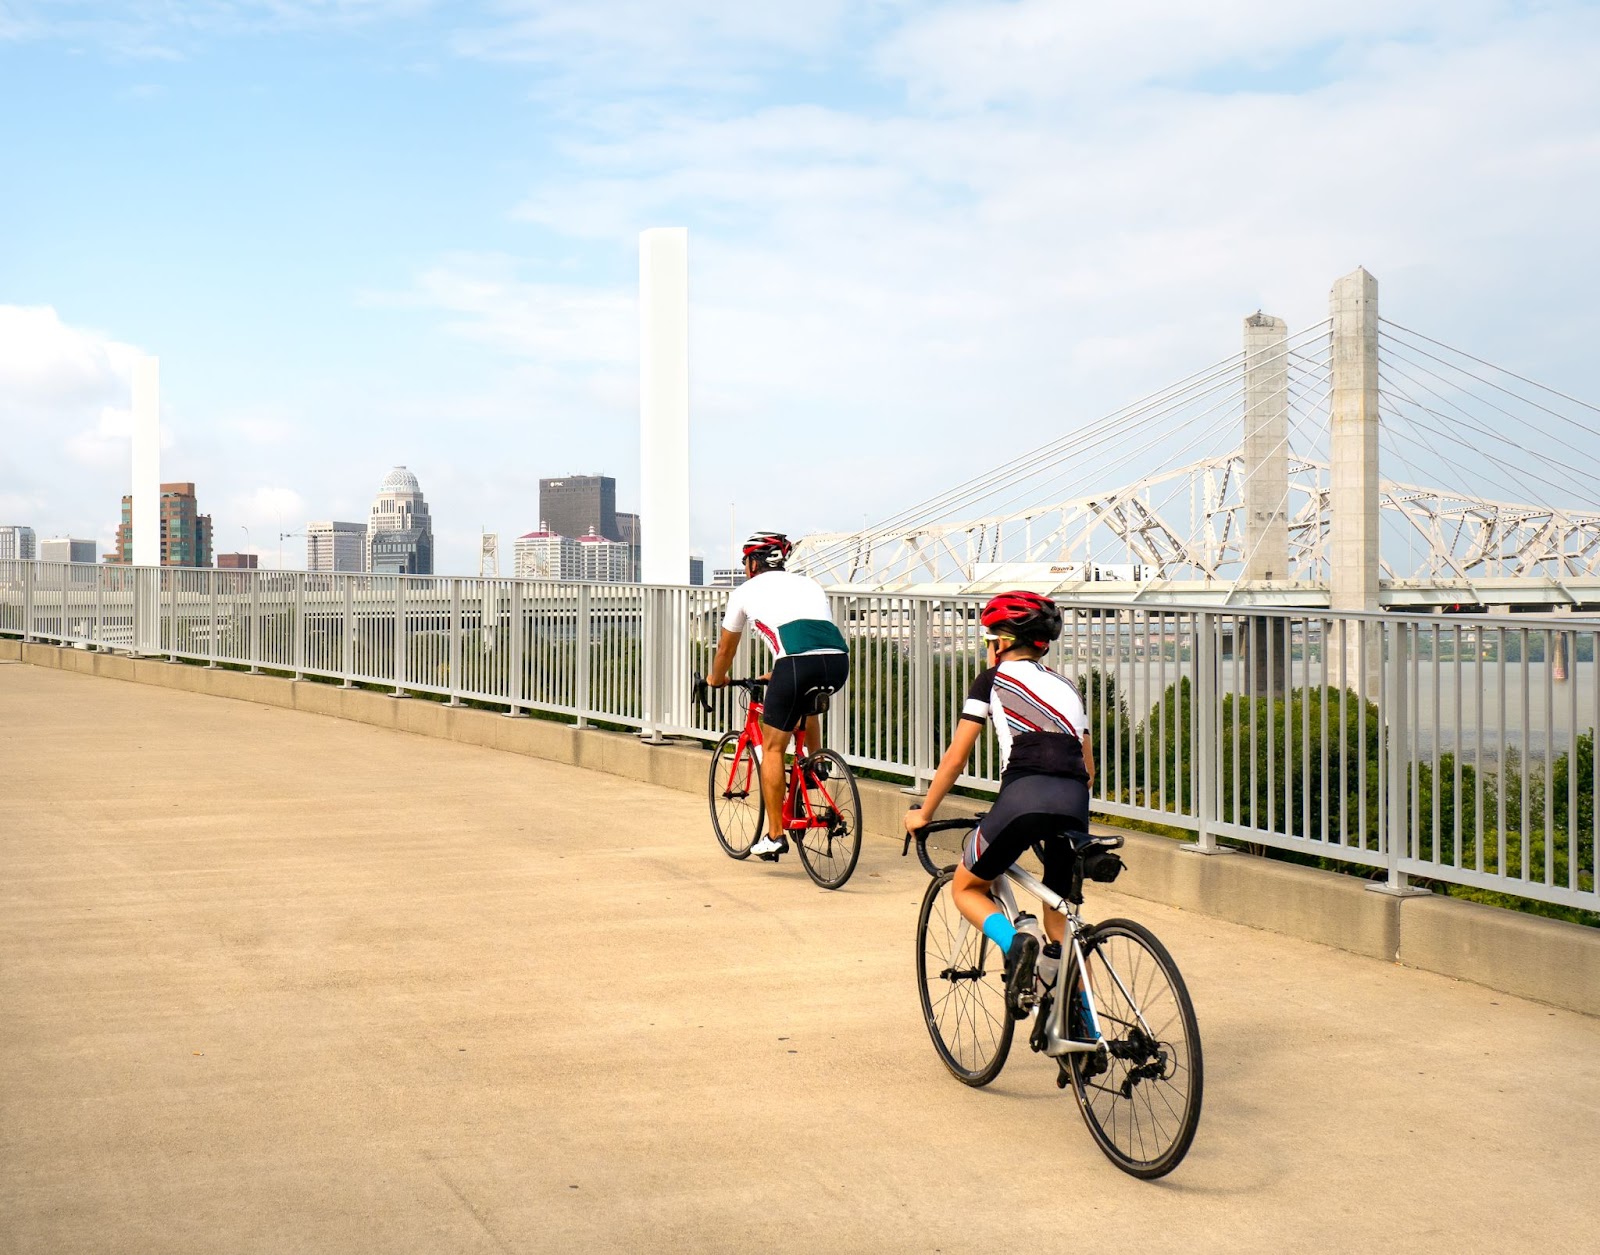 People riding on a Louisville urban bike path across a bridge